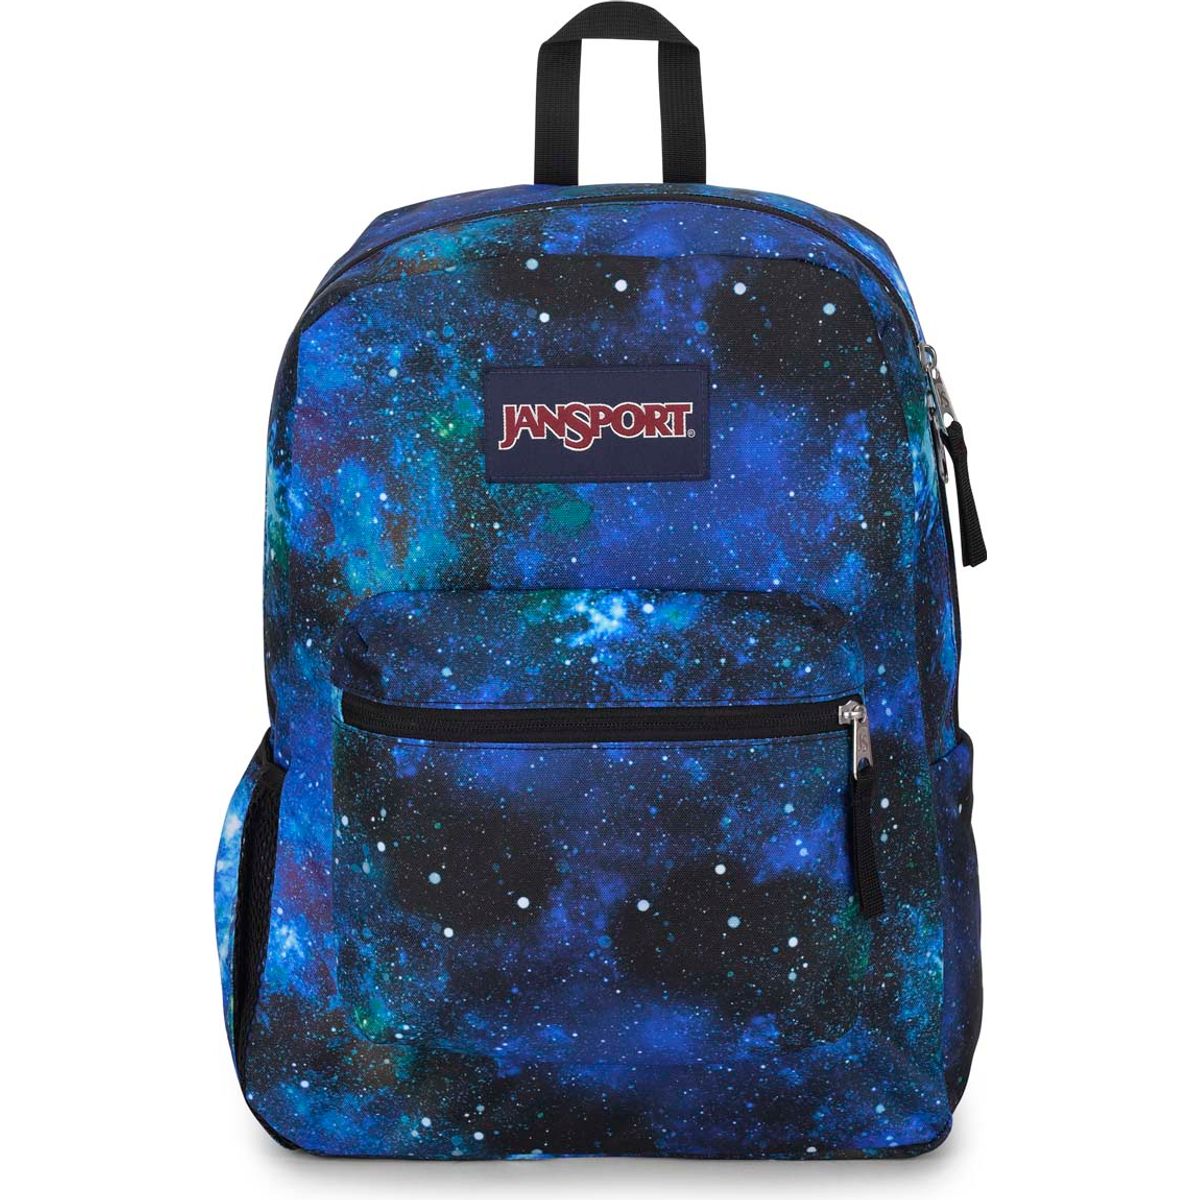 JanSport Cross Town Backpack - Cyberspace Galaxy